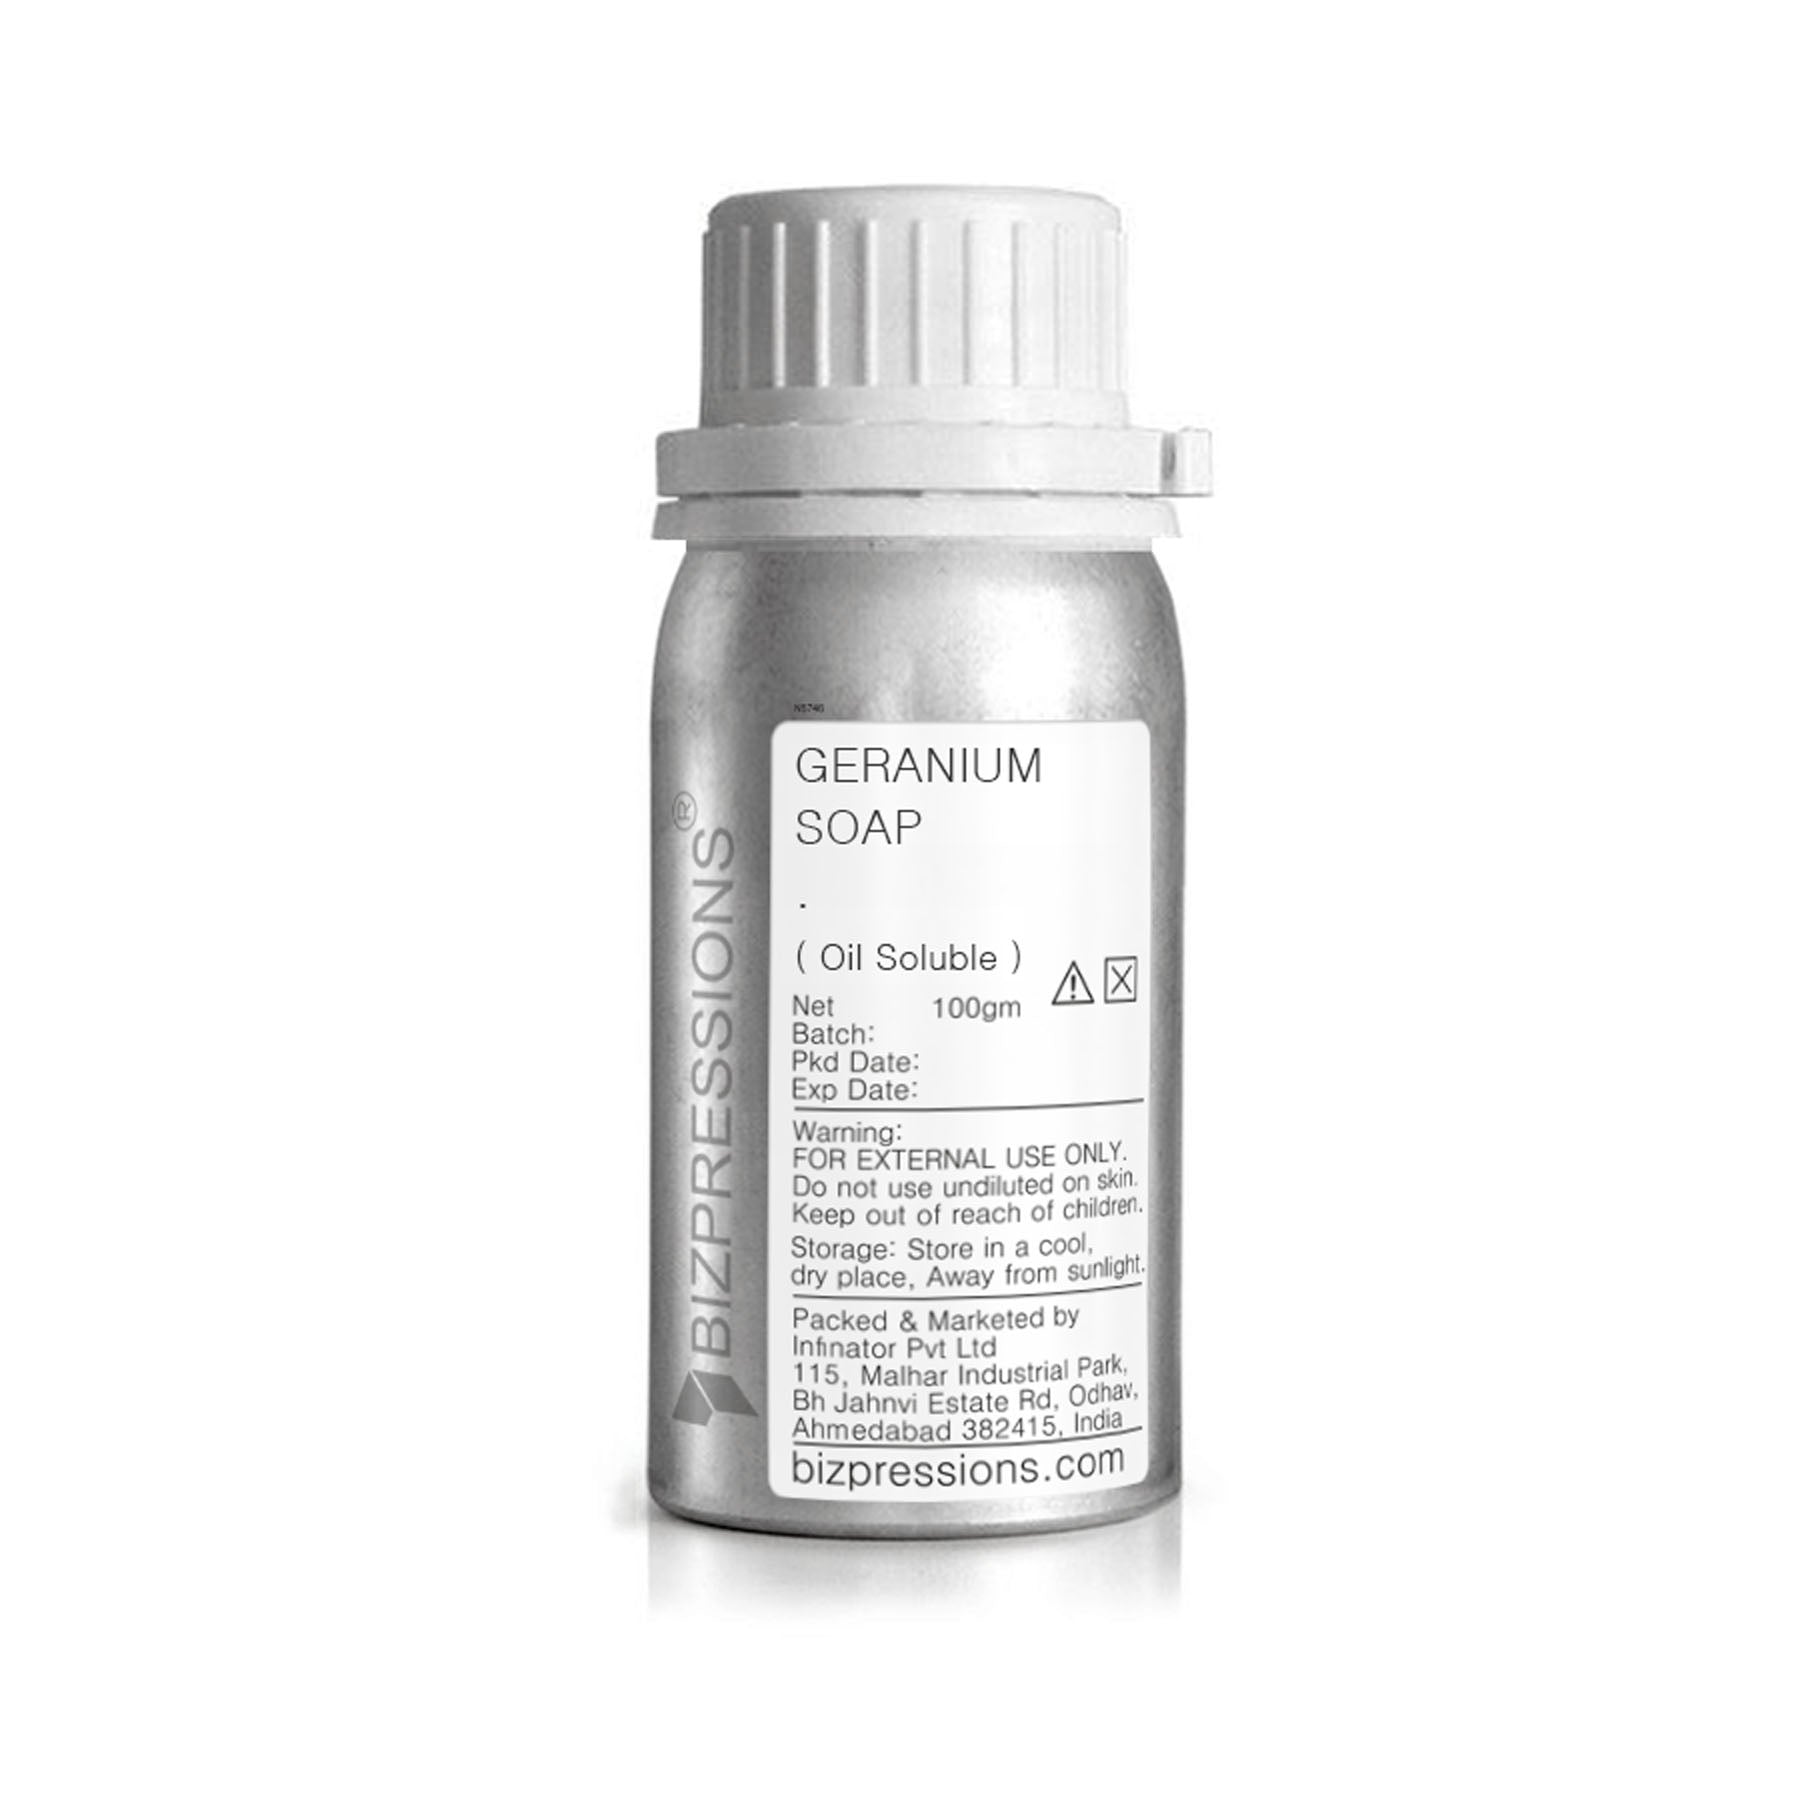 GERANIUM SOAP - Fragrance ( Oil Soluble ) - 100 gm